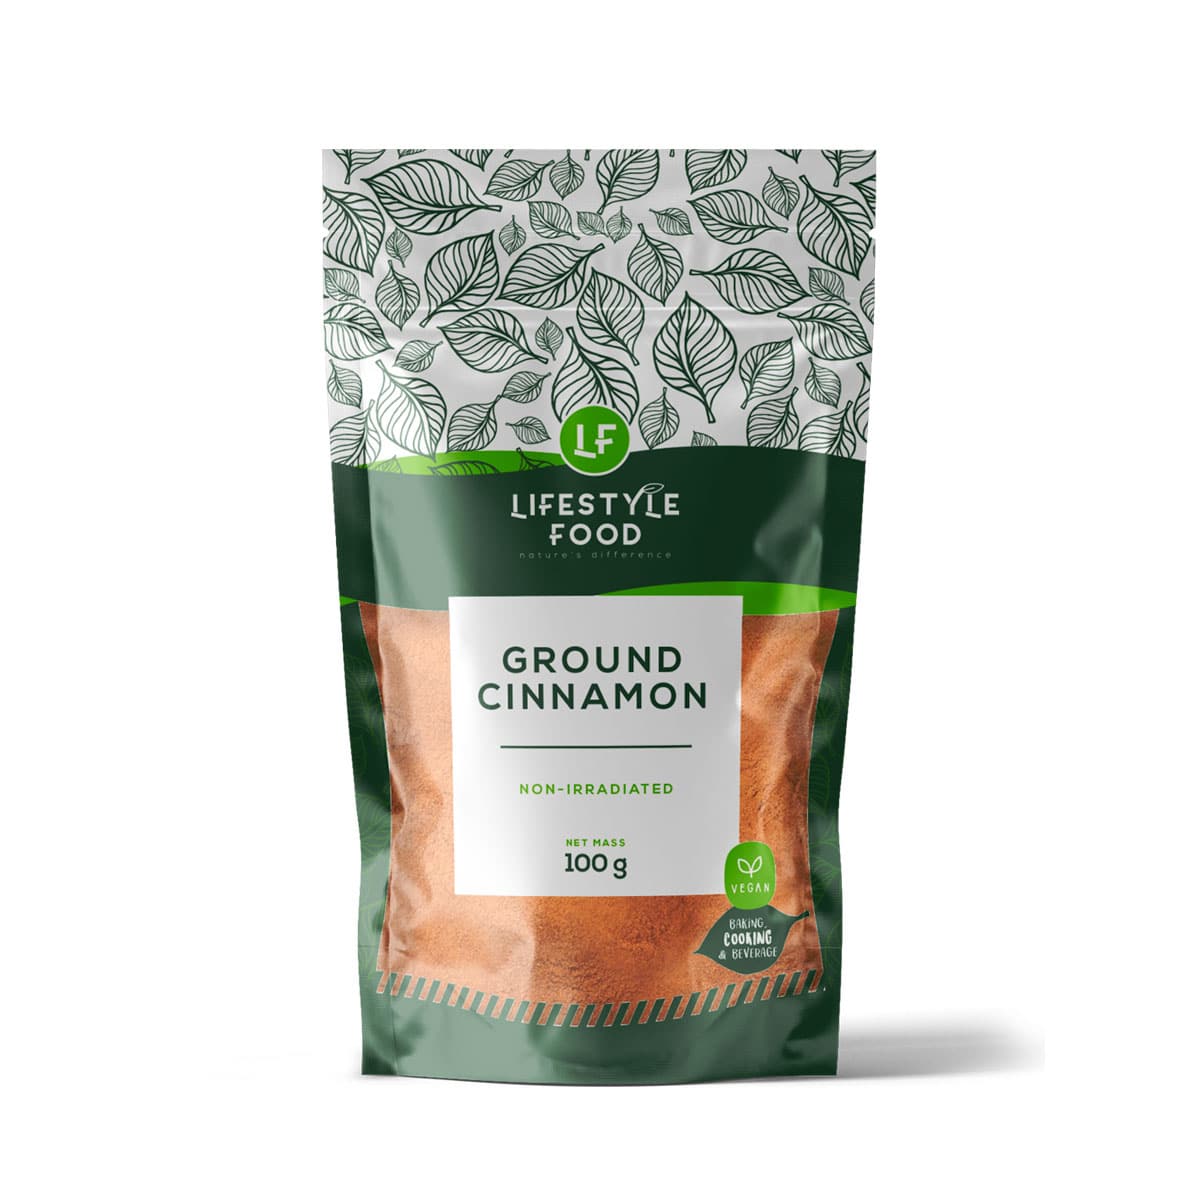 Lifestyle Food Ground Cinnamon Refill Non-Irradiated - 100g